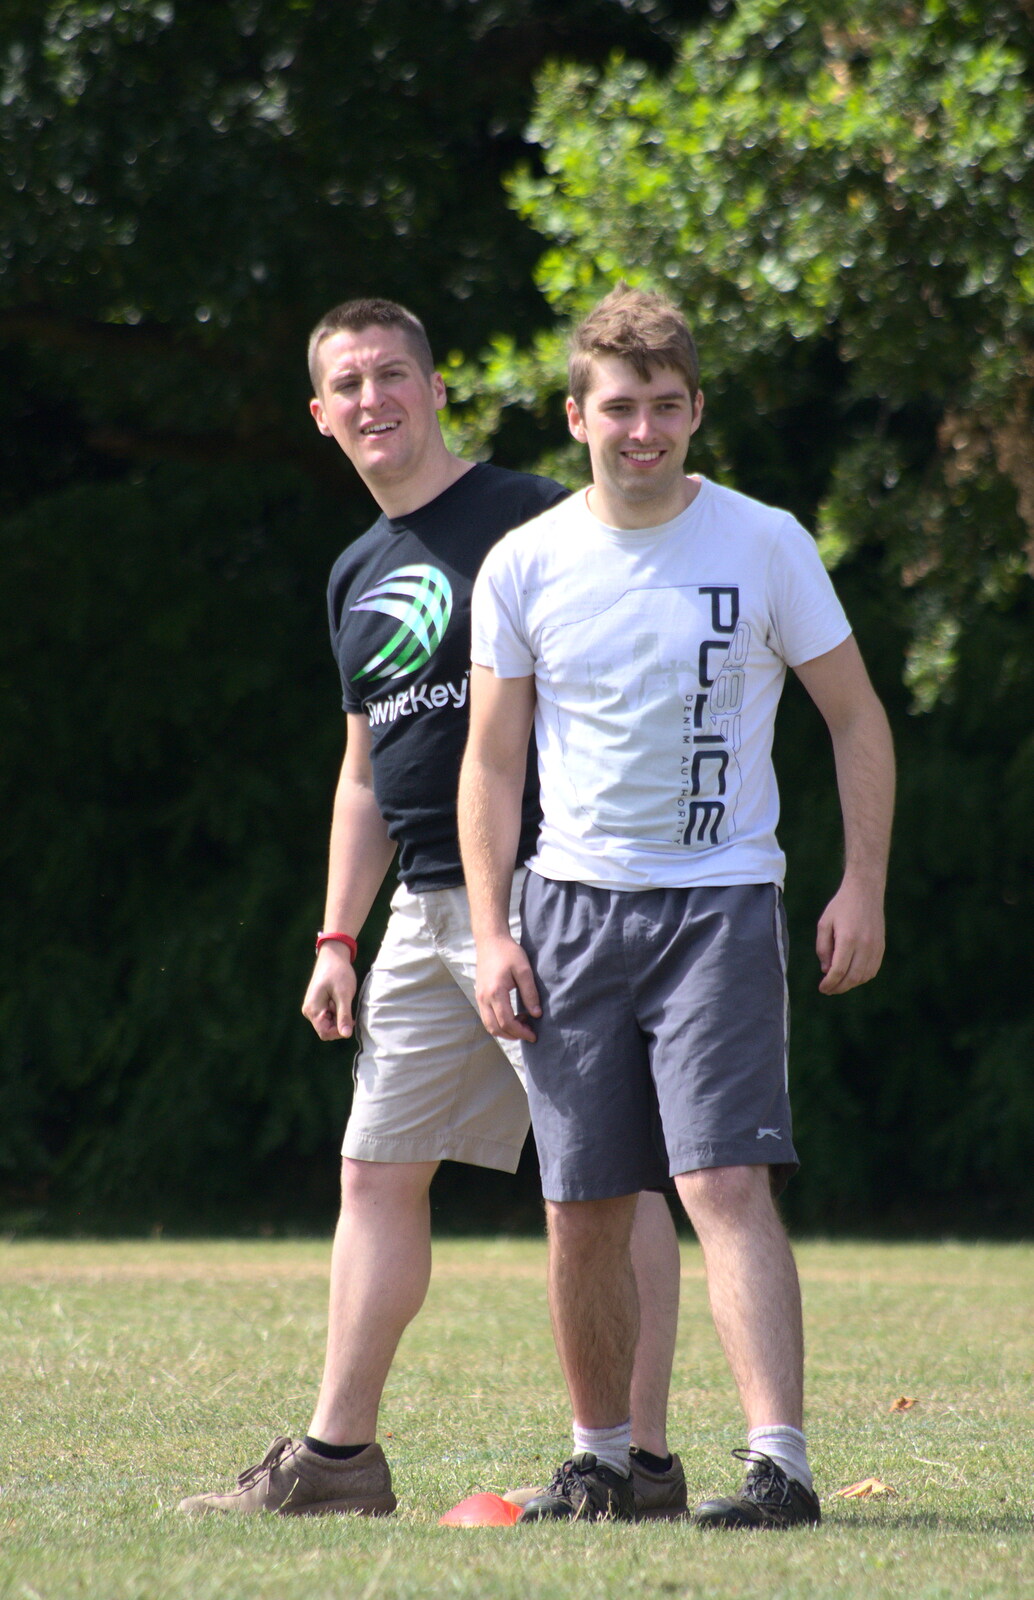 Paul and Doug from It's a SwiftKey Knockout, Richmond Rugby Club, Richmond, Surrey - 7th July 2015